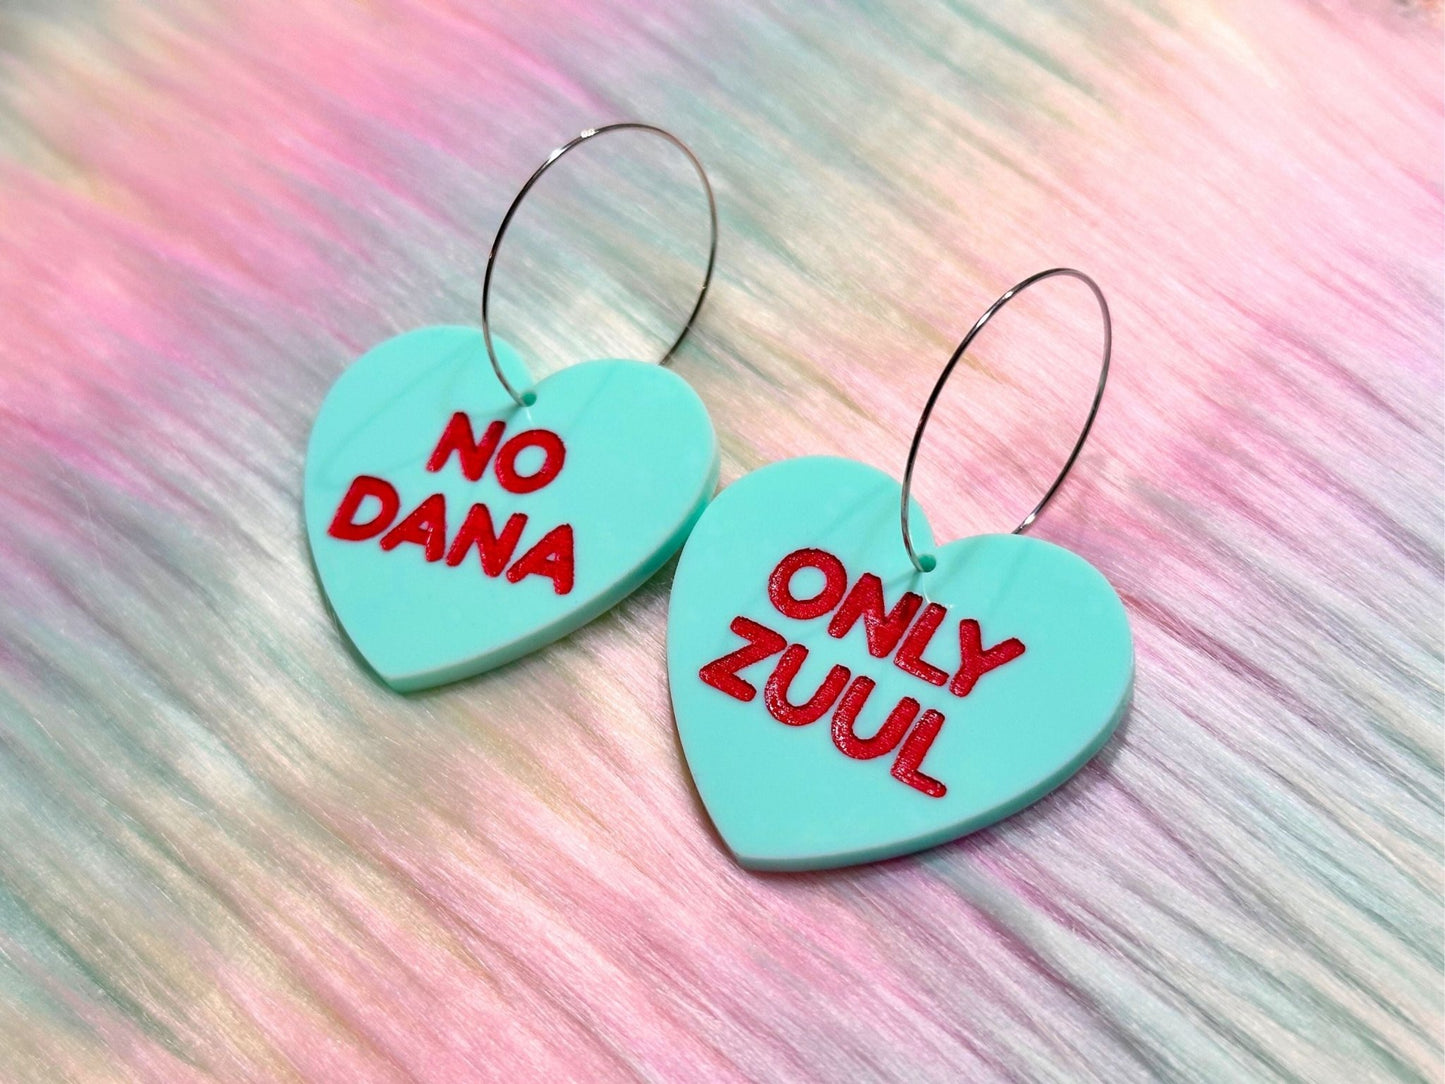 Nerdy Heart Earrings - "No Dana, Only Zuul" - Painted Raina